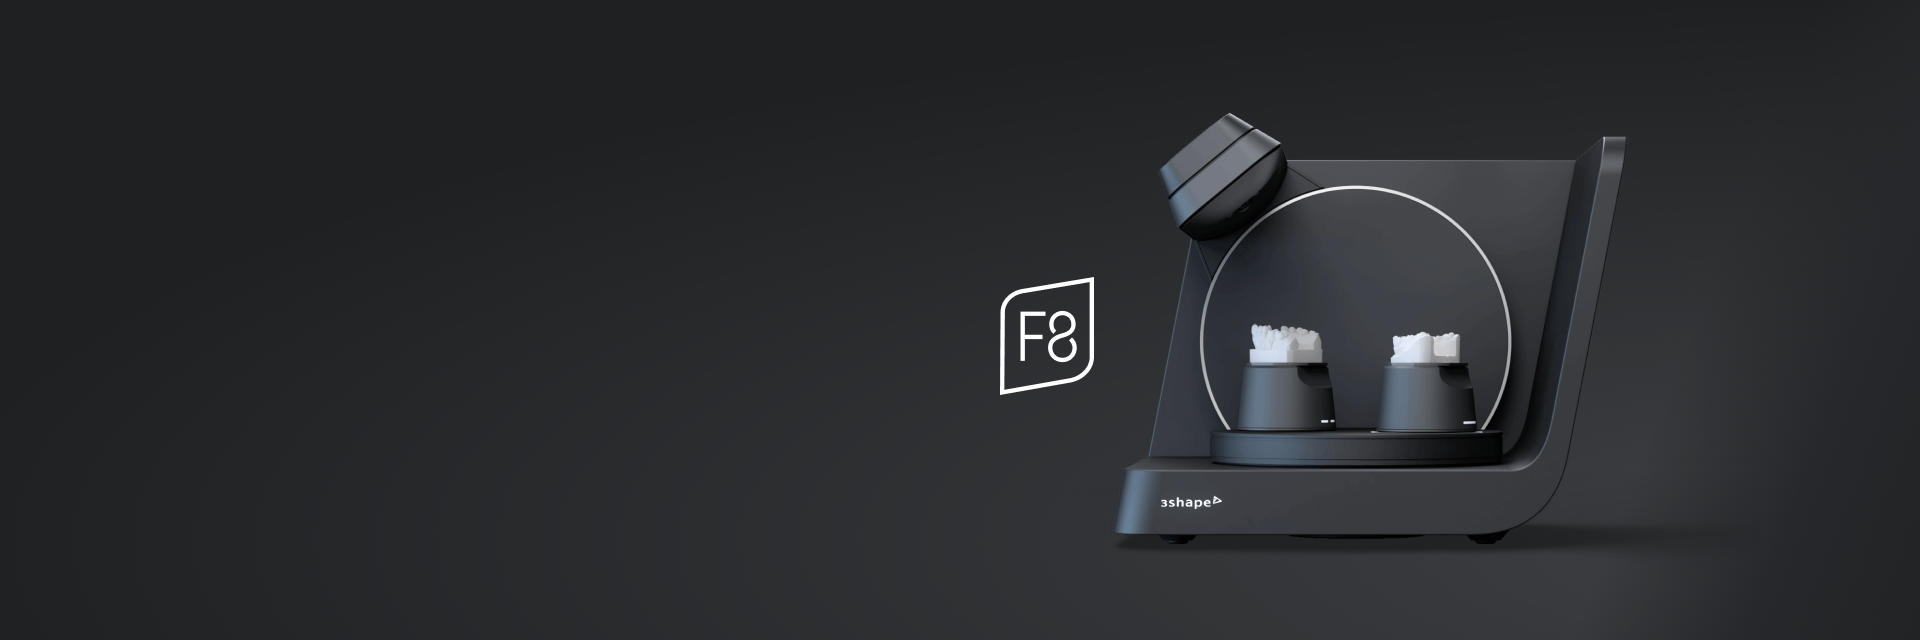 F8 lab scanner